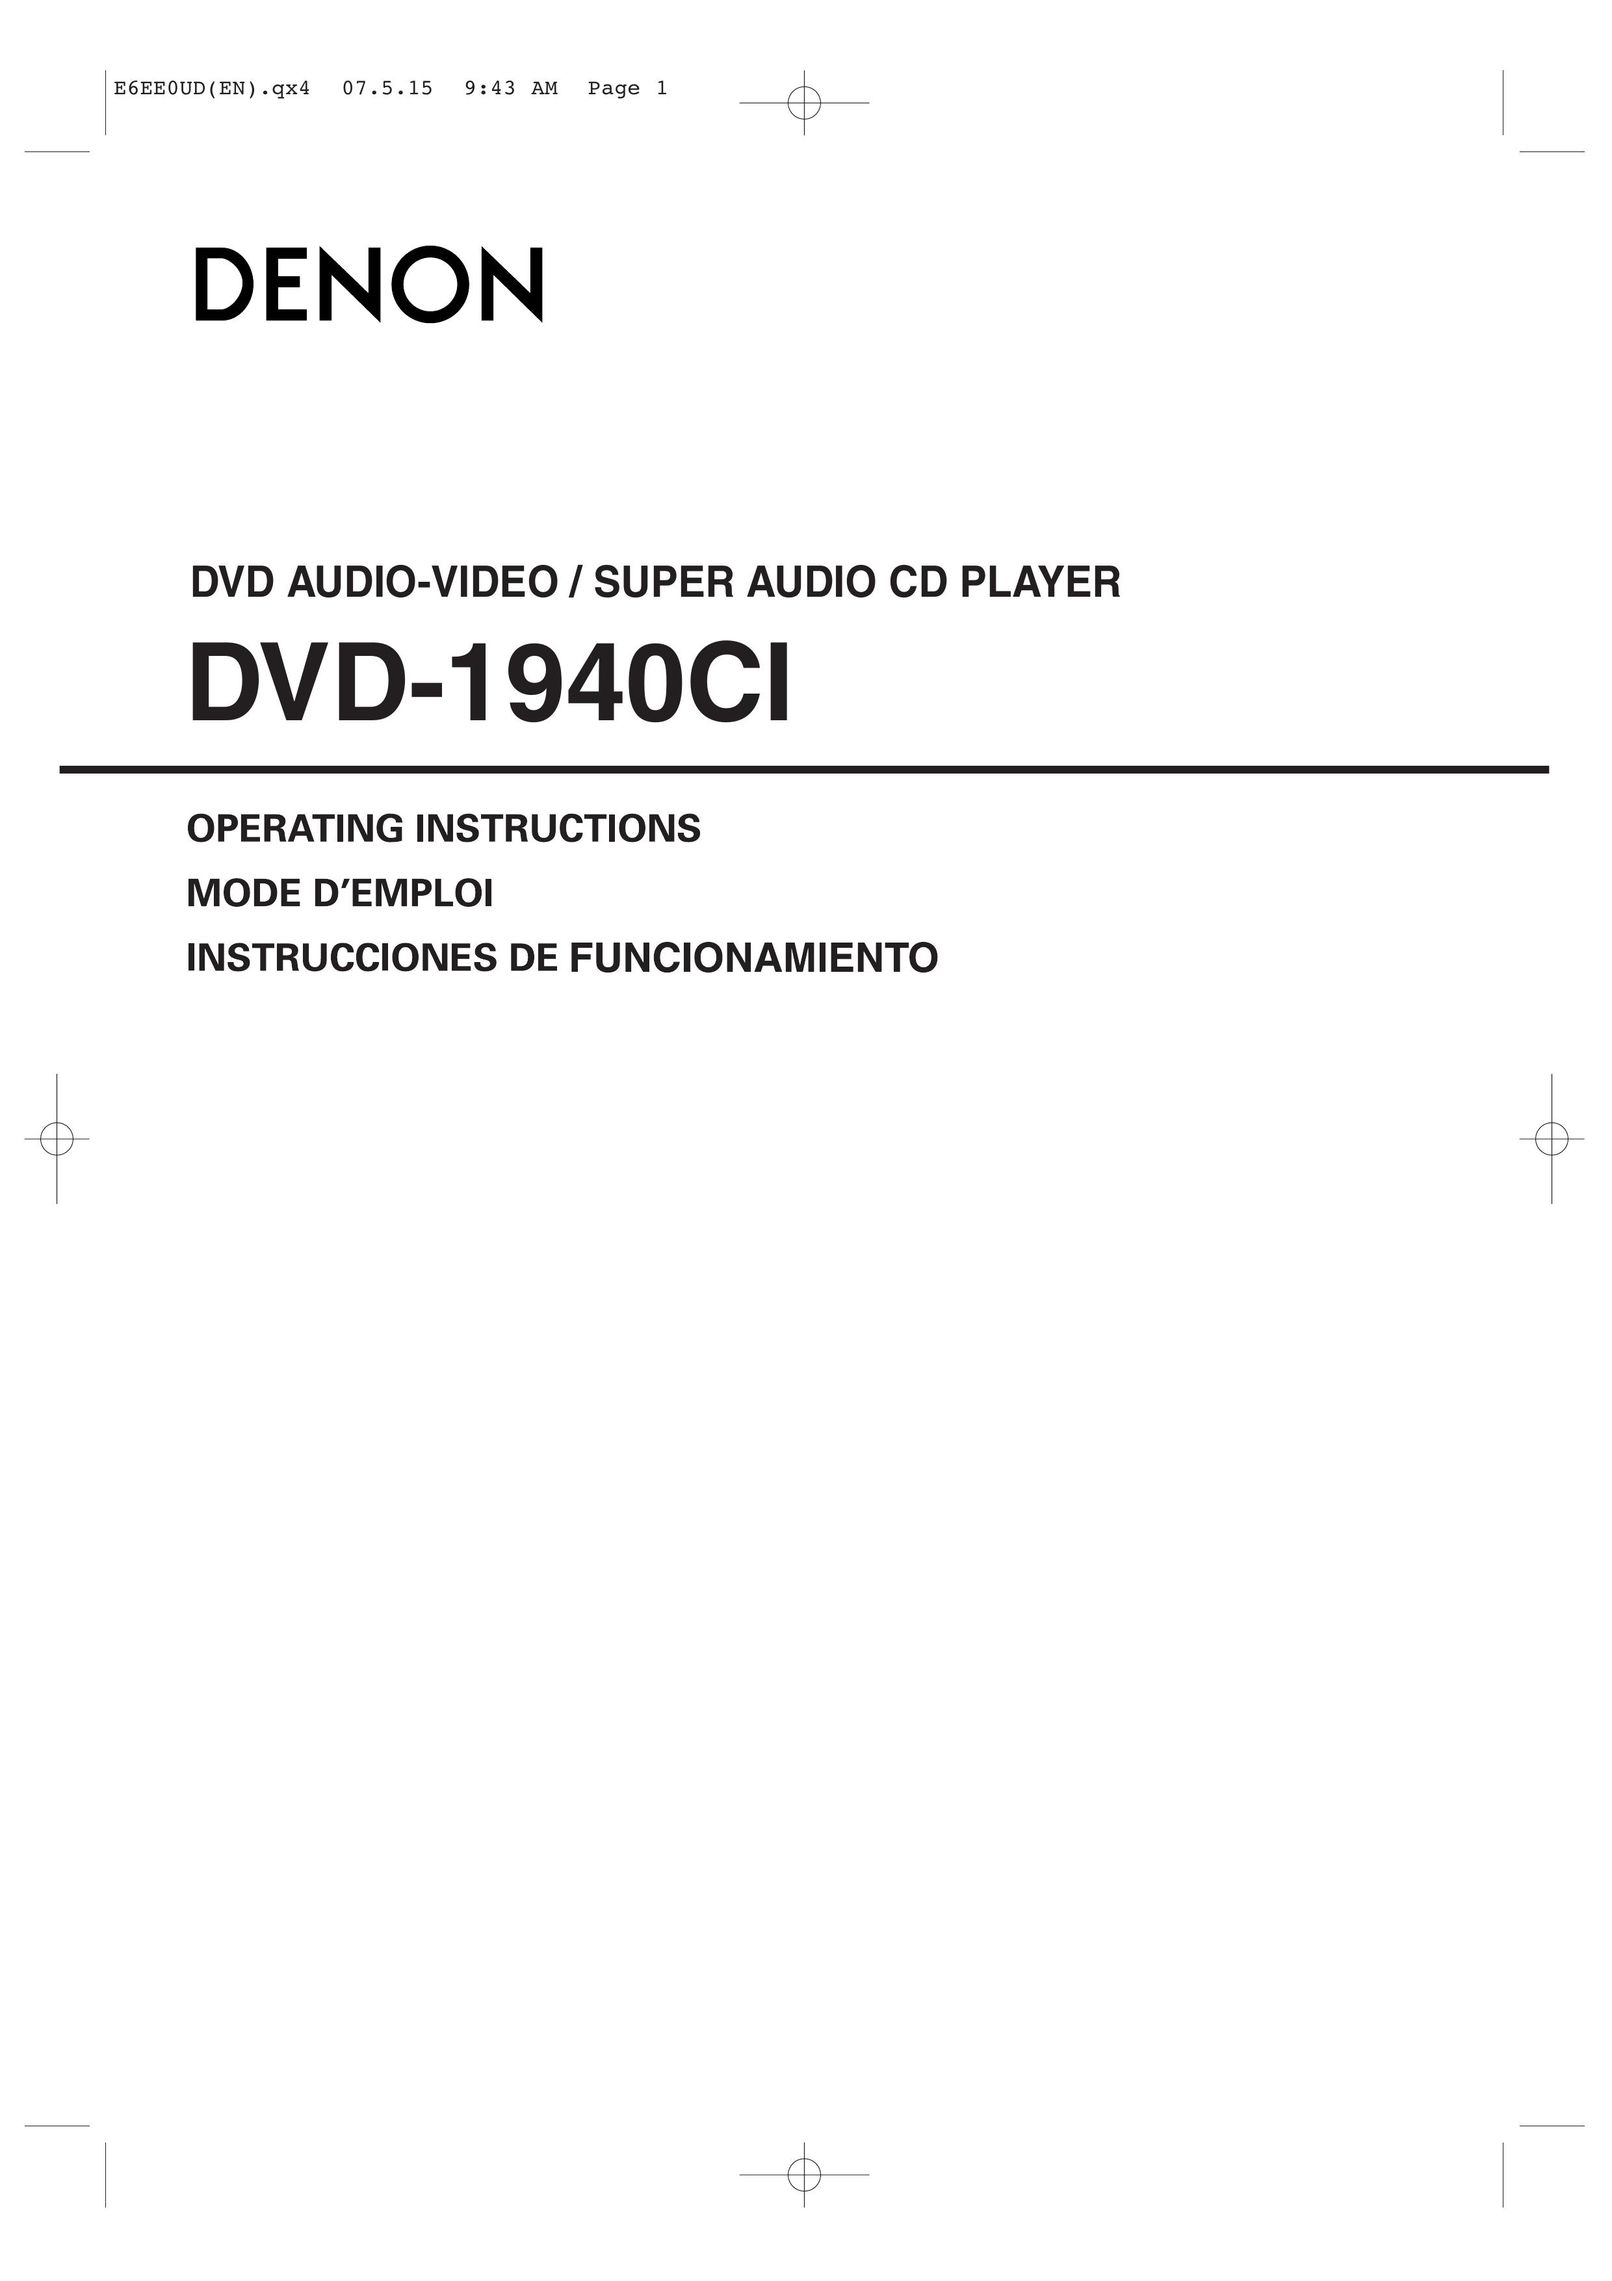 Denon DVD-1940CI CD Player User Manual